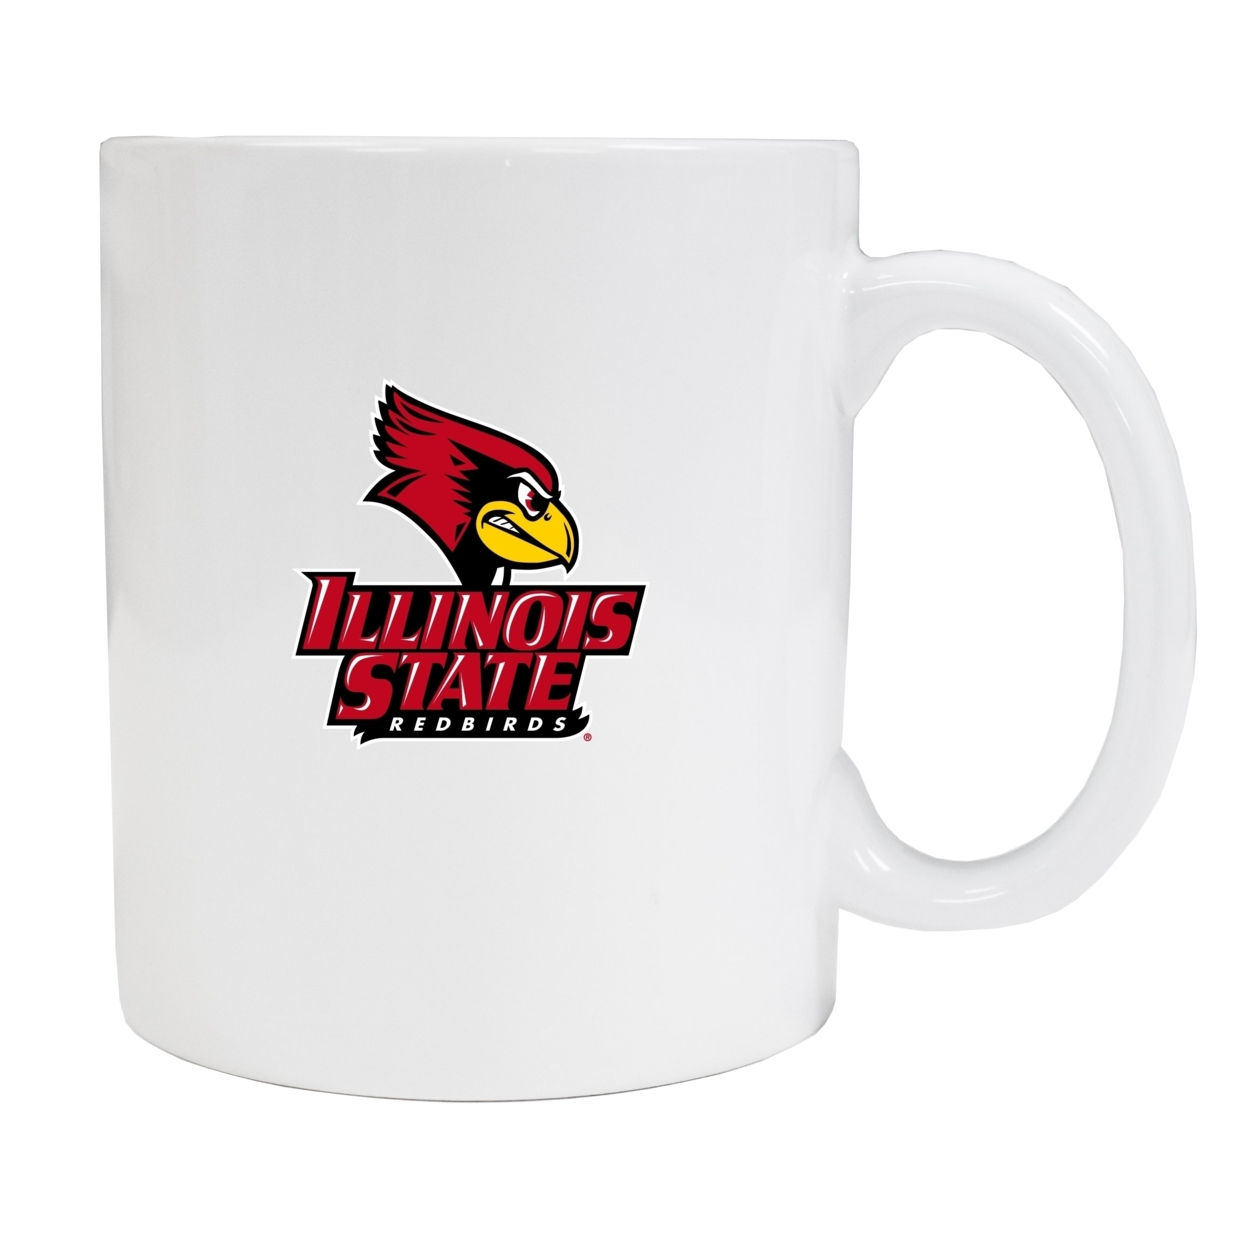 Illinois State Redbirds White Ceramic Mug (White).